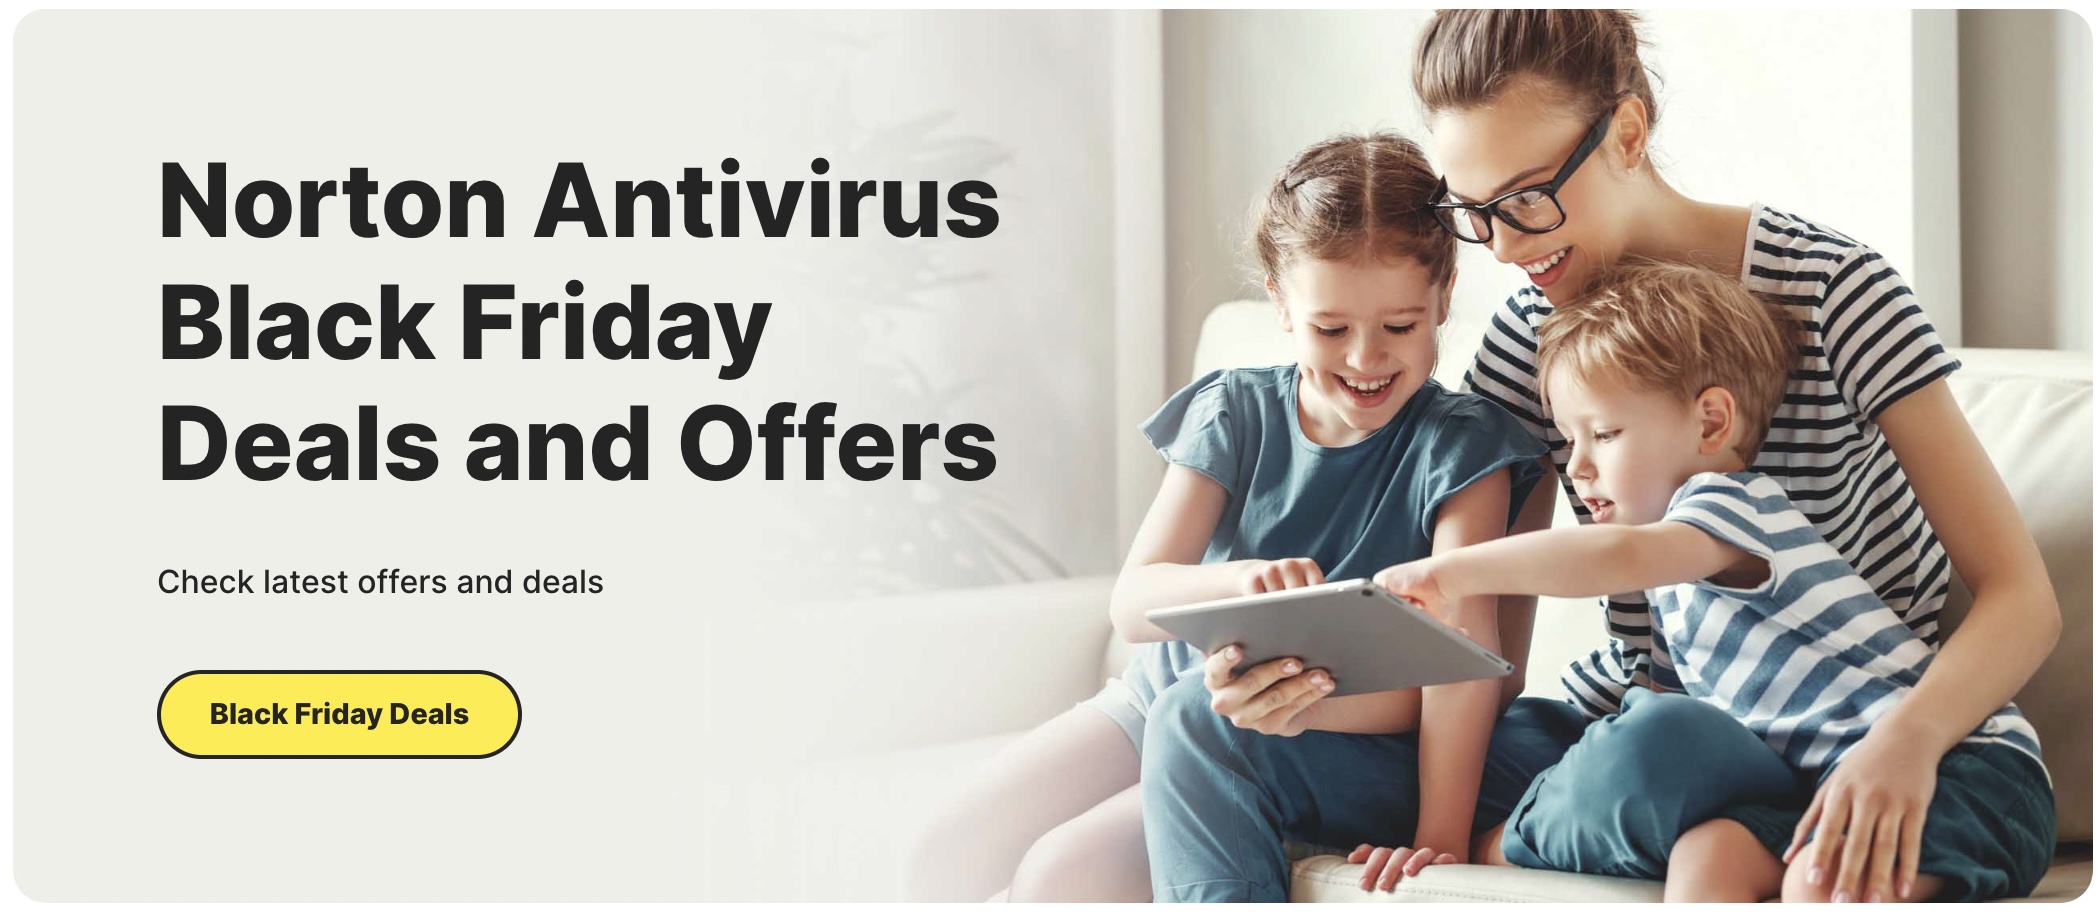 Norton Antivirus Black Friday